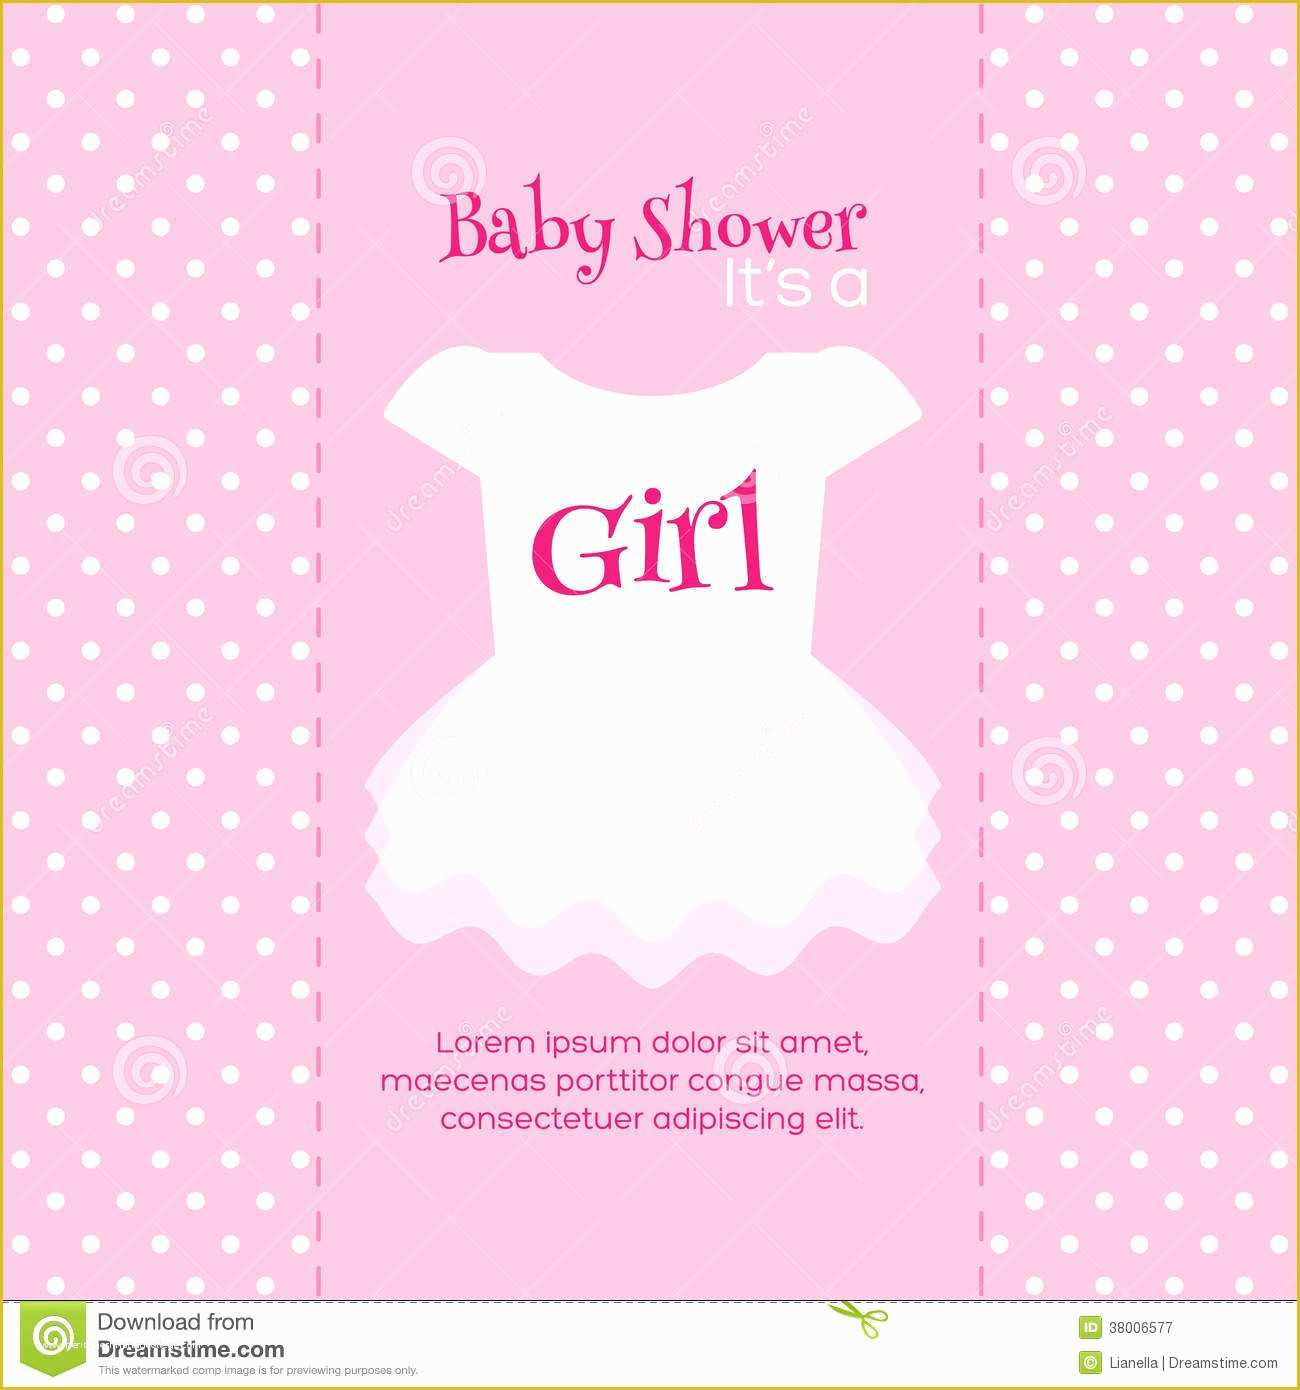 Princess Baby Shower Invitation Templates Free Of Free Princess Baby Shower Invitation Templates